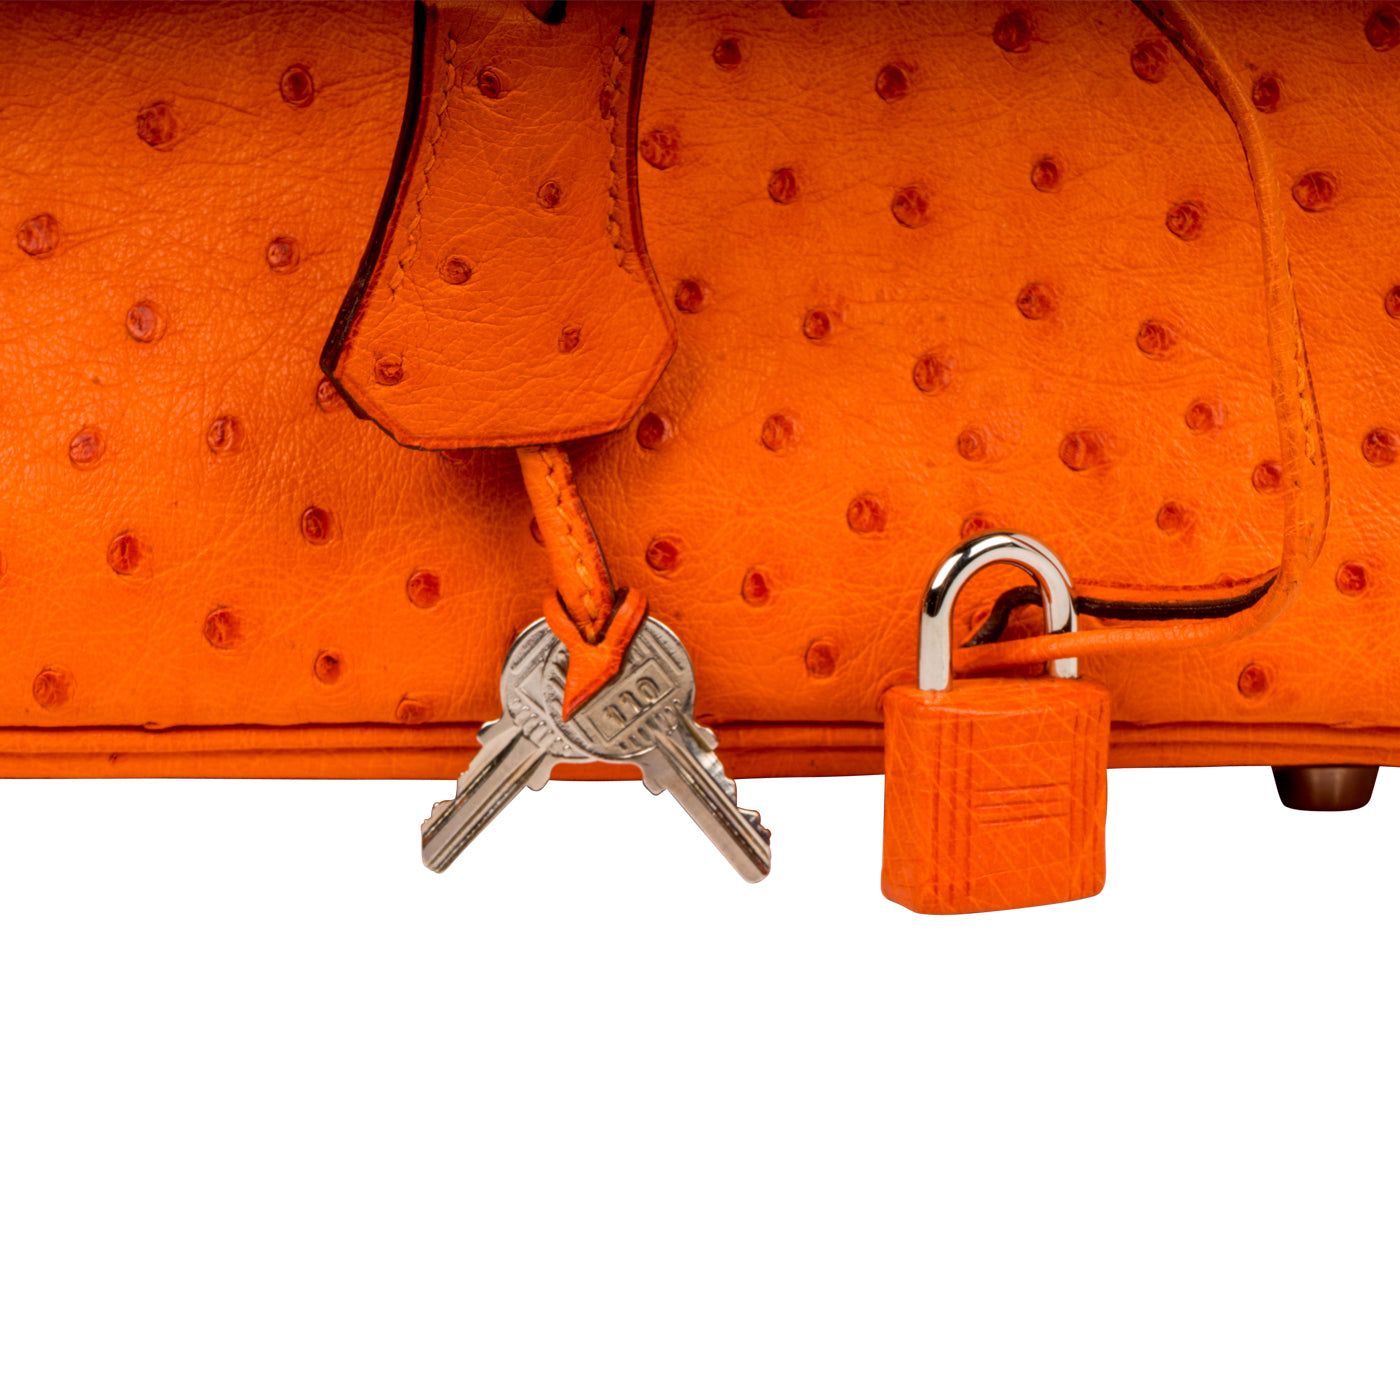 Hermes Birkin 30 Exotic Tangerine Orange Ostrich PHW Handbag in Box